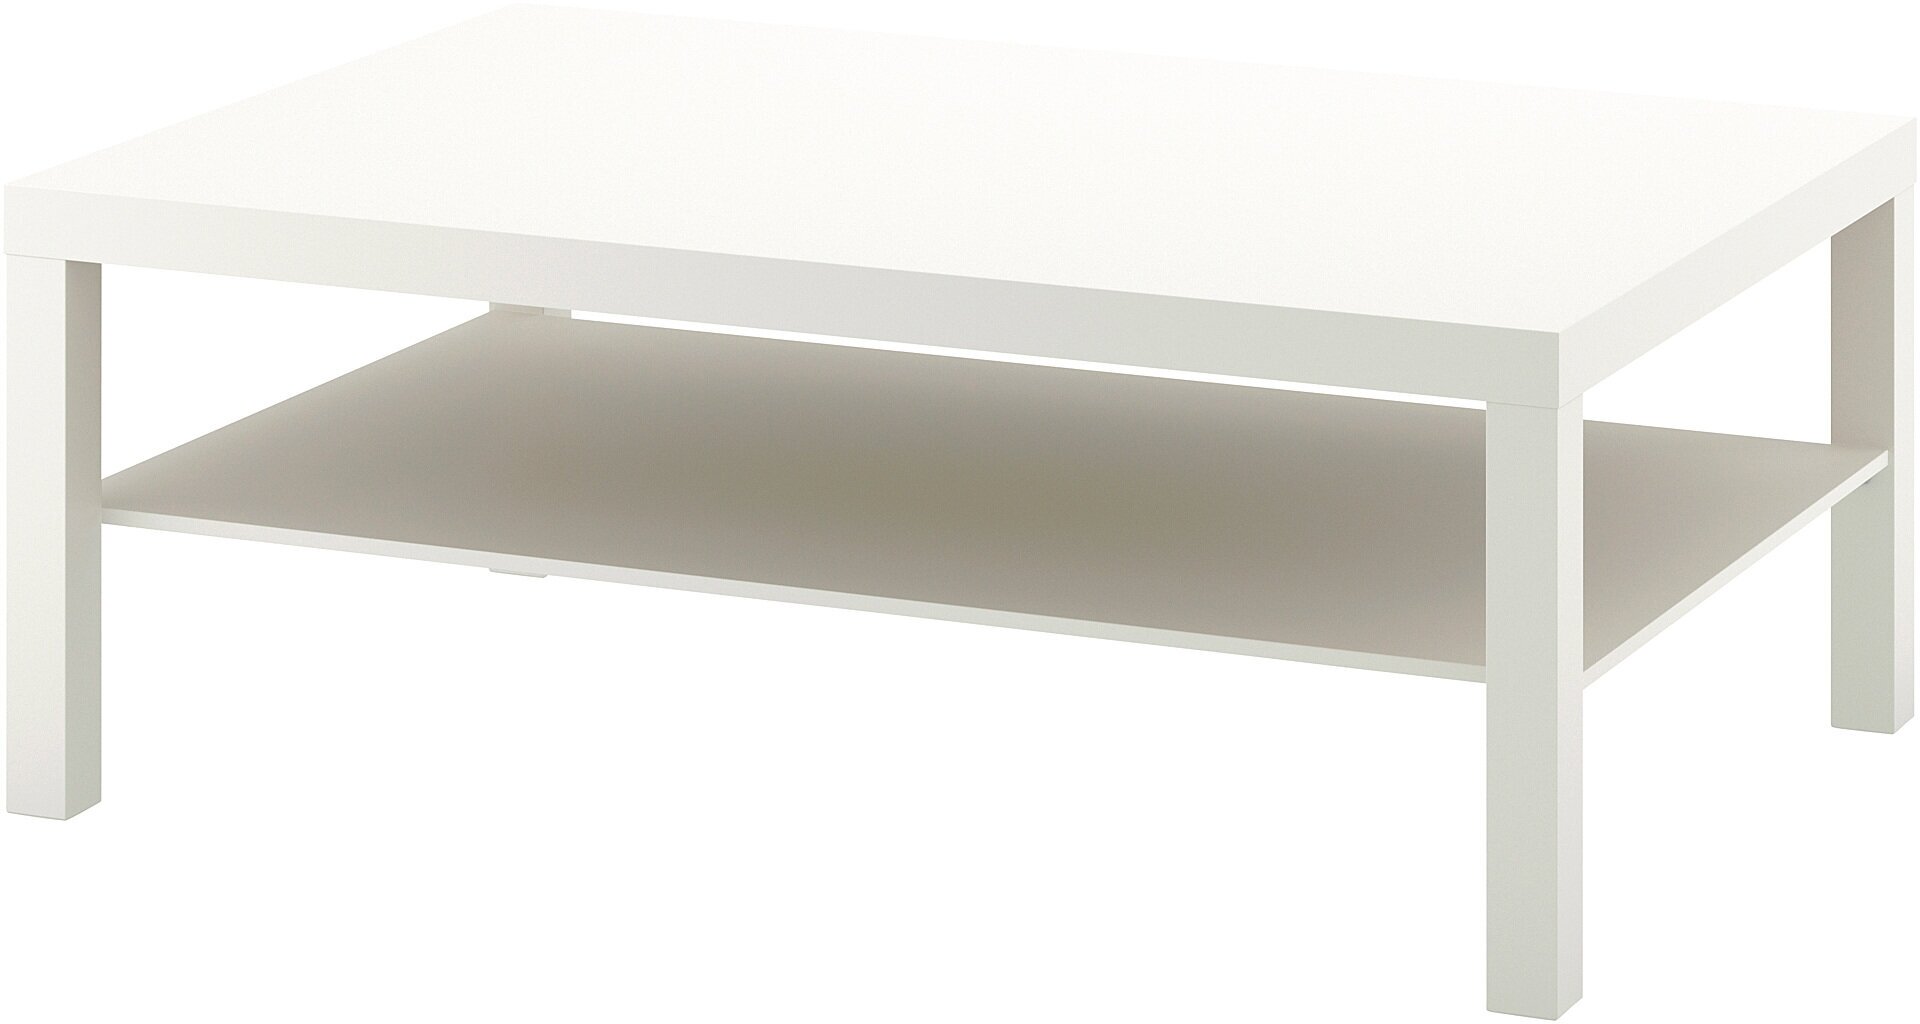 Придиванный столик икеа ЛАКК (IKEA LAKK), 118x78 см, белый